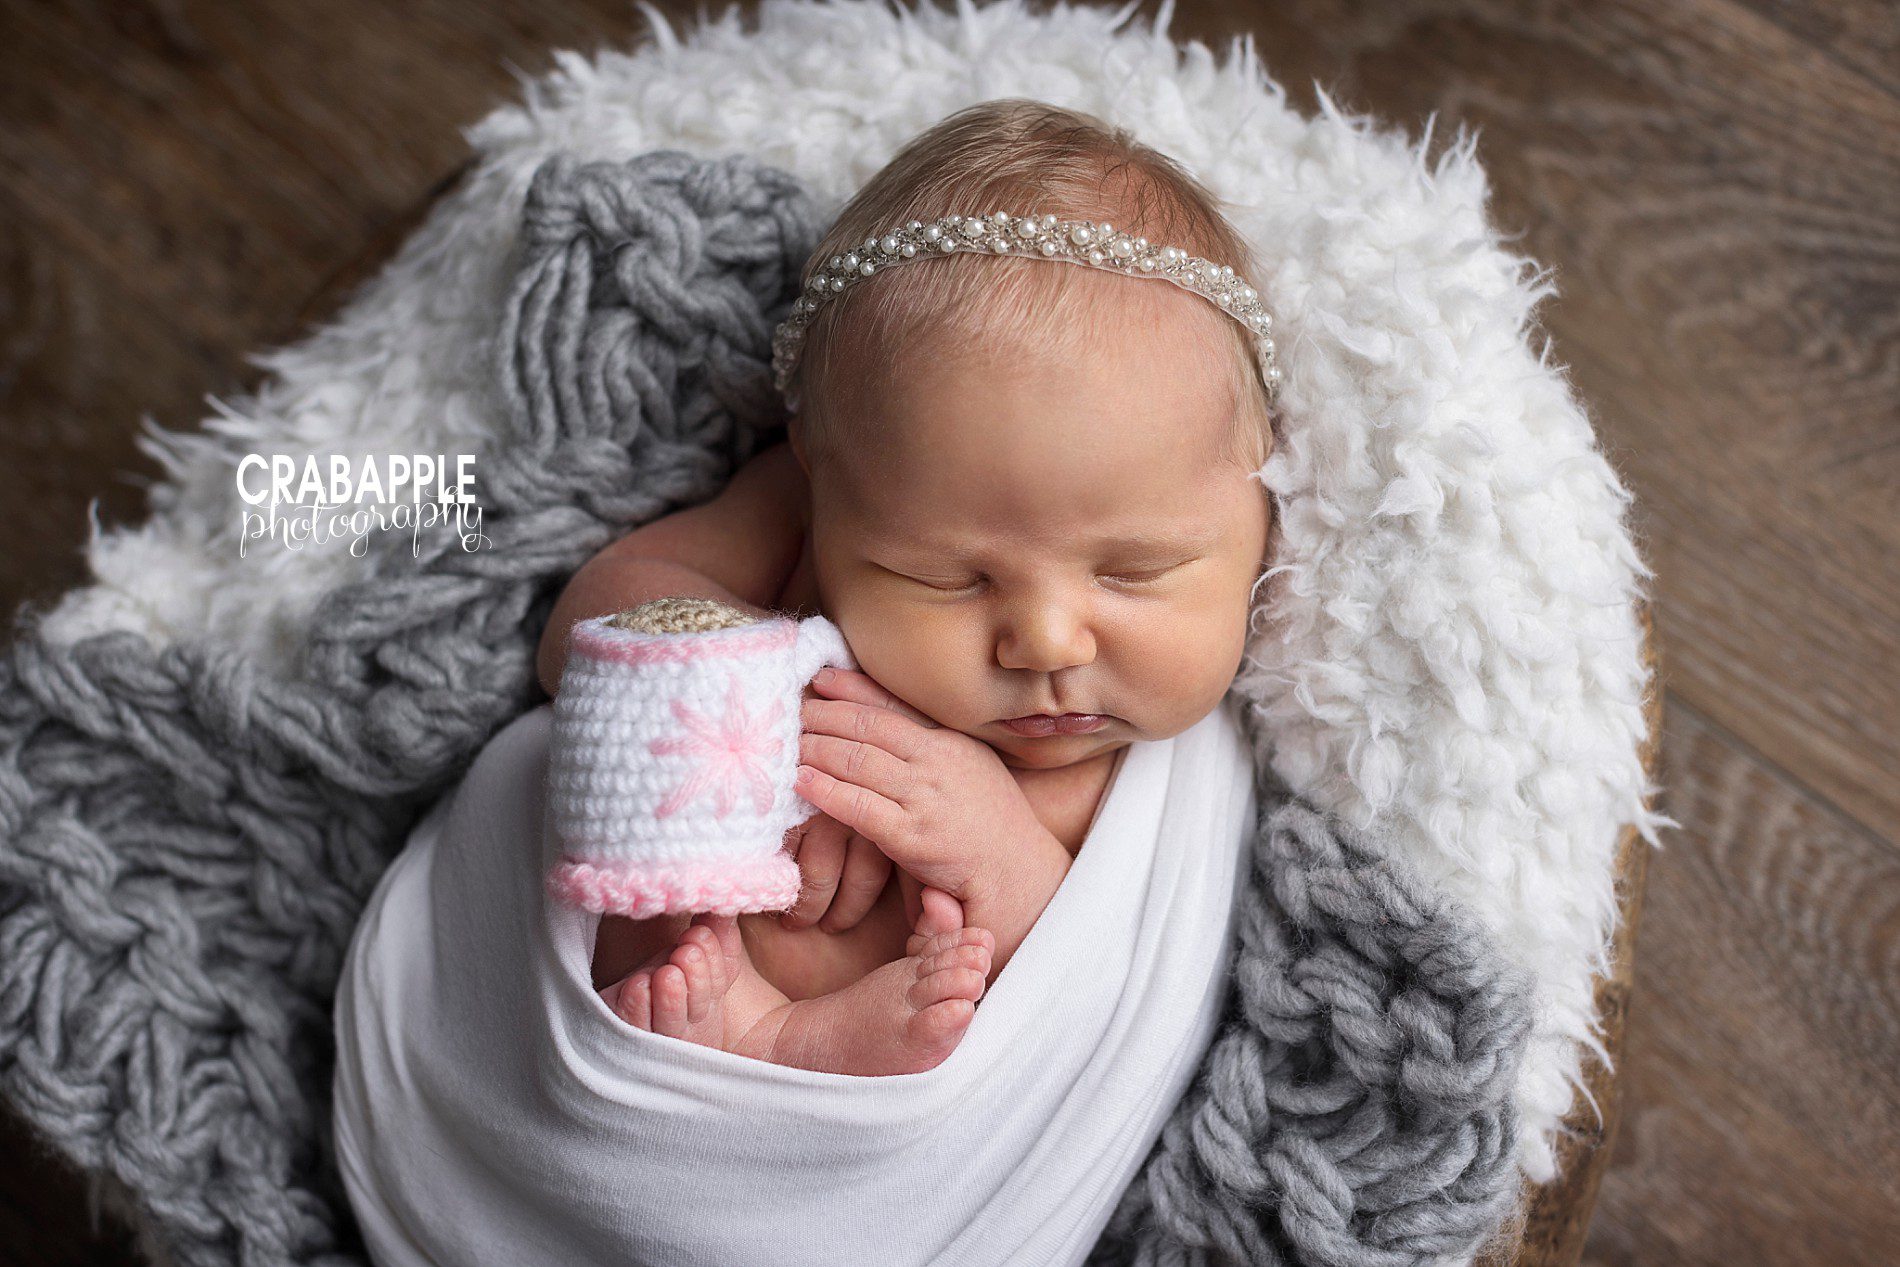 Fun newborn photo ideas using knit teacup.